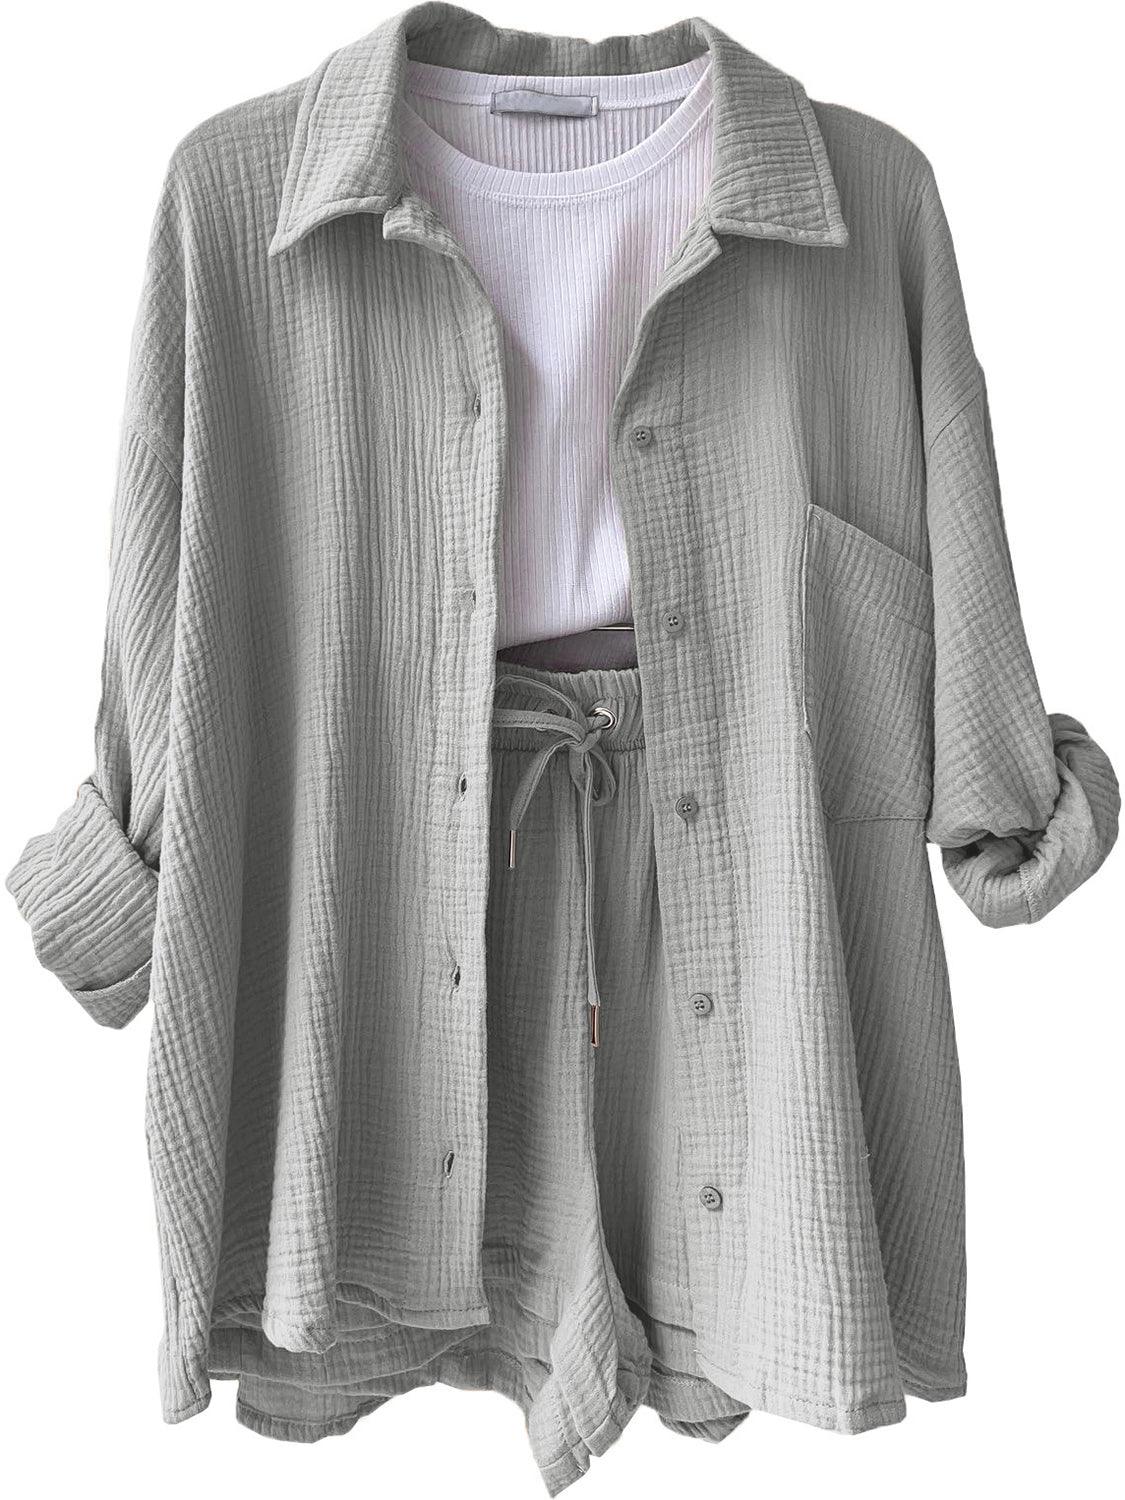 Bona Fide Fashion - Texture Button Up Shirt and Drawstring Bottom Set - Women Fashion - Bona Fide Fashion